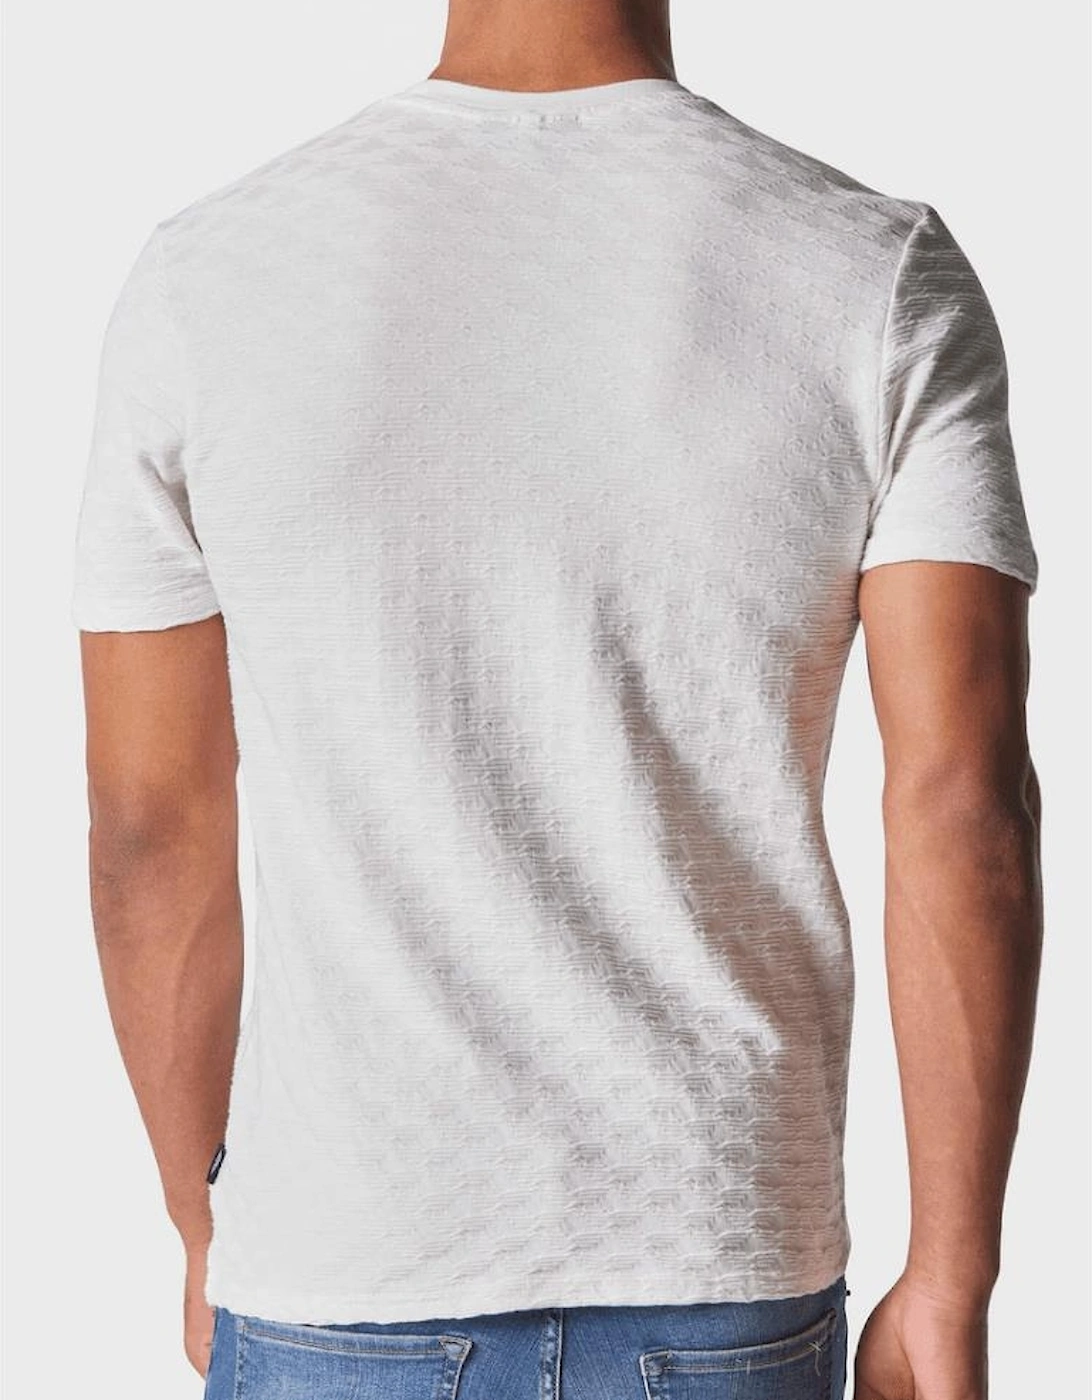 Maspes Textured Metal Logo Bone White T-Shirt